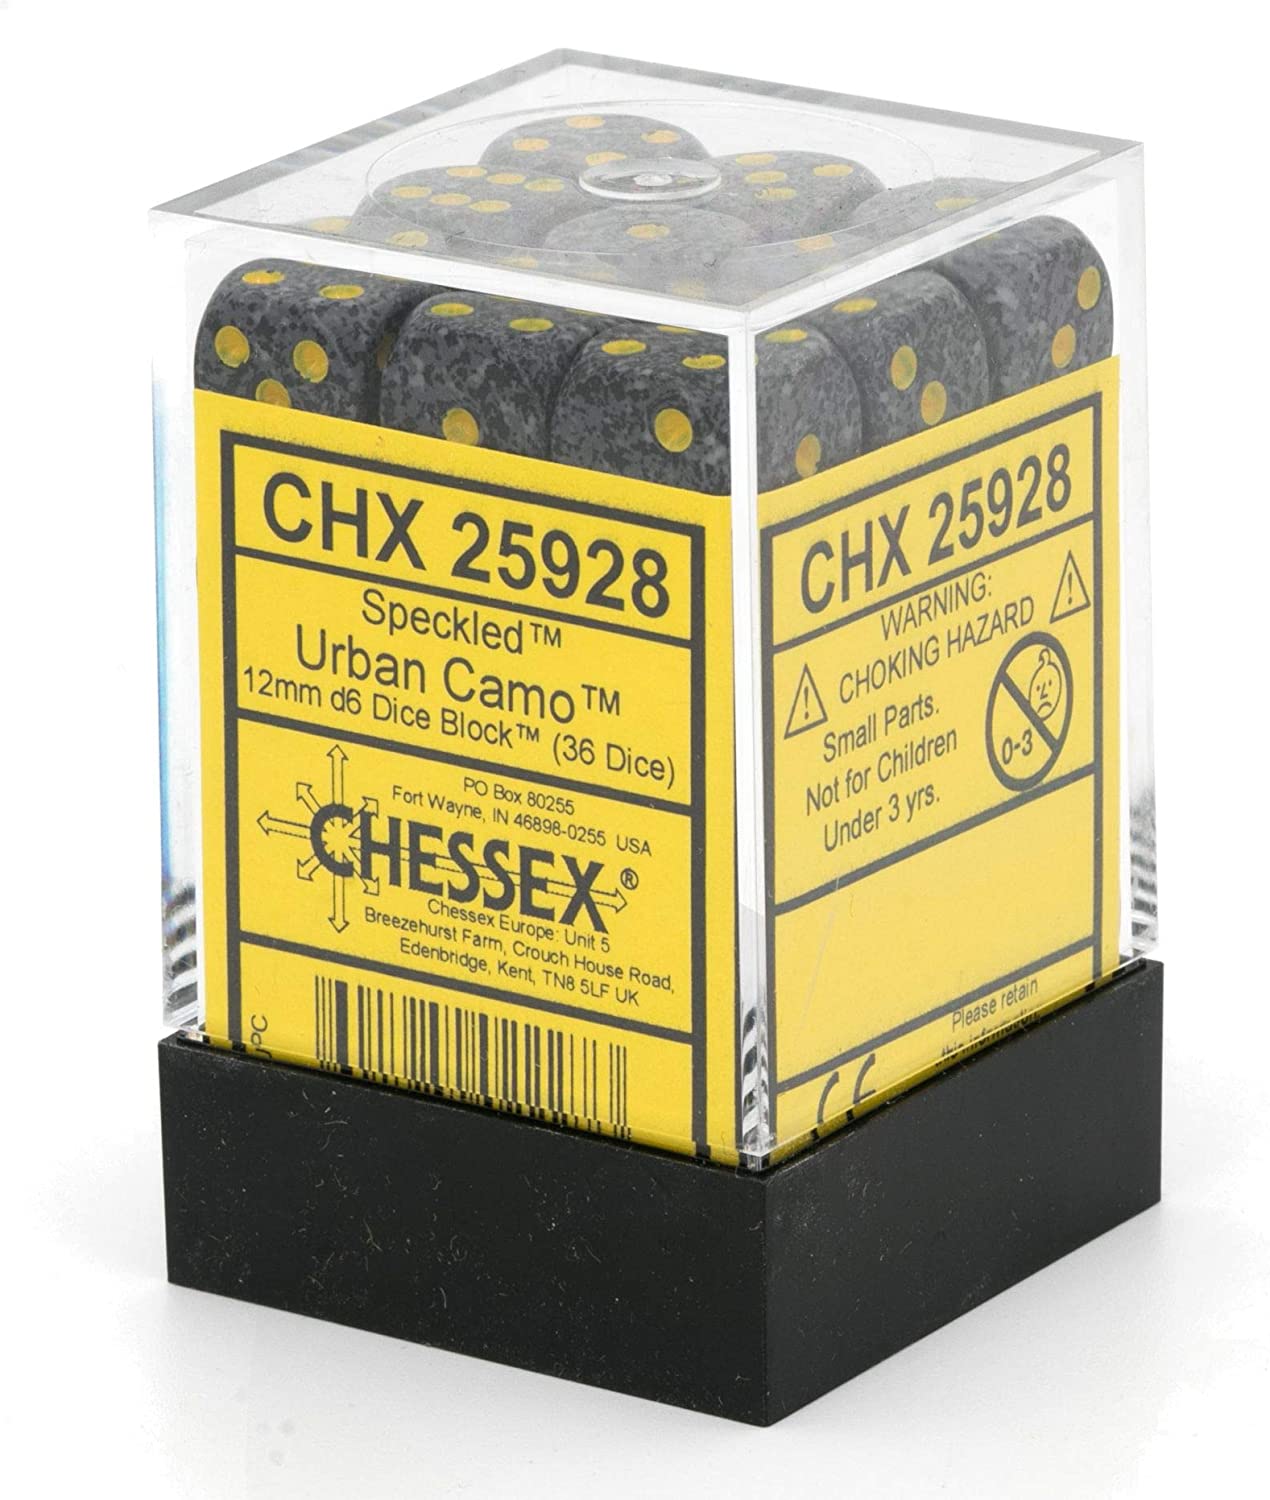 Chessex Dice: D6 Block 12mm - Speckled - Urban Camo (CHX 25928) - Gamescape